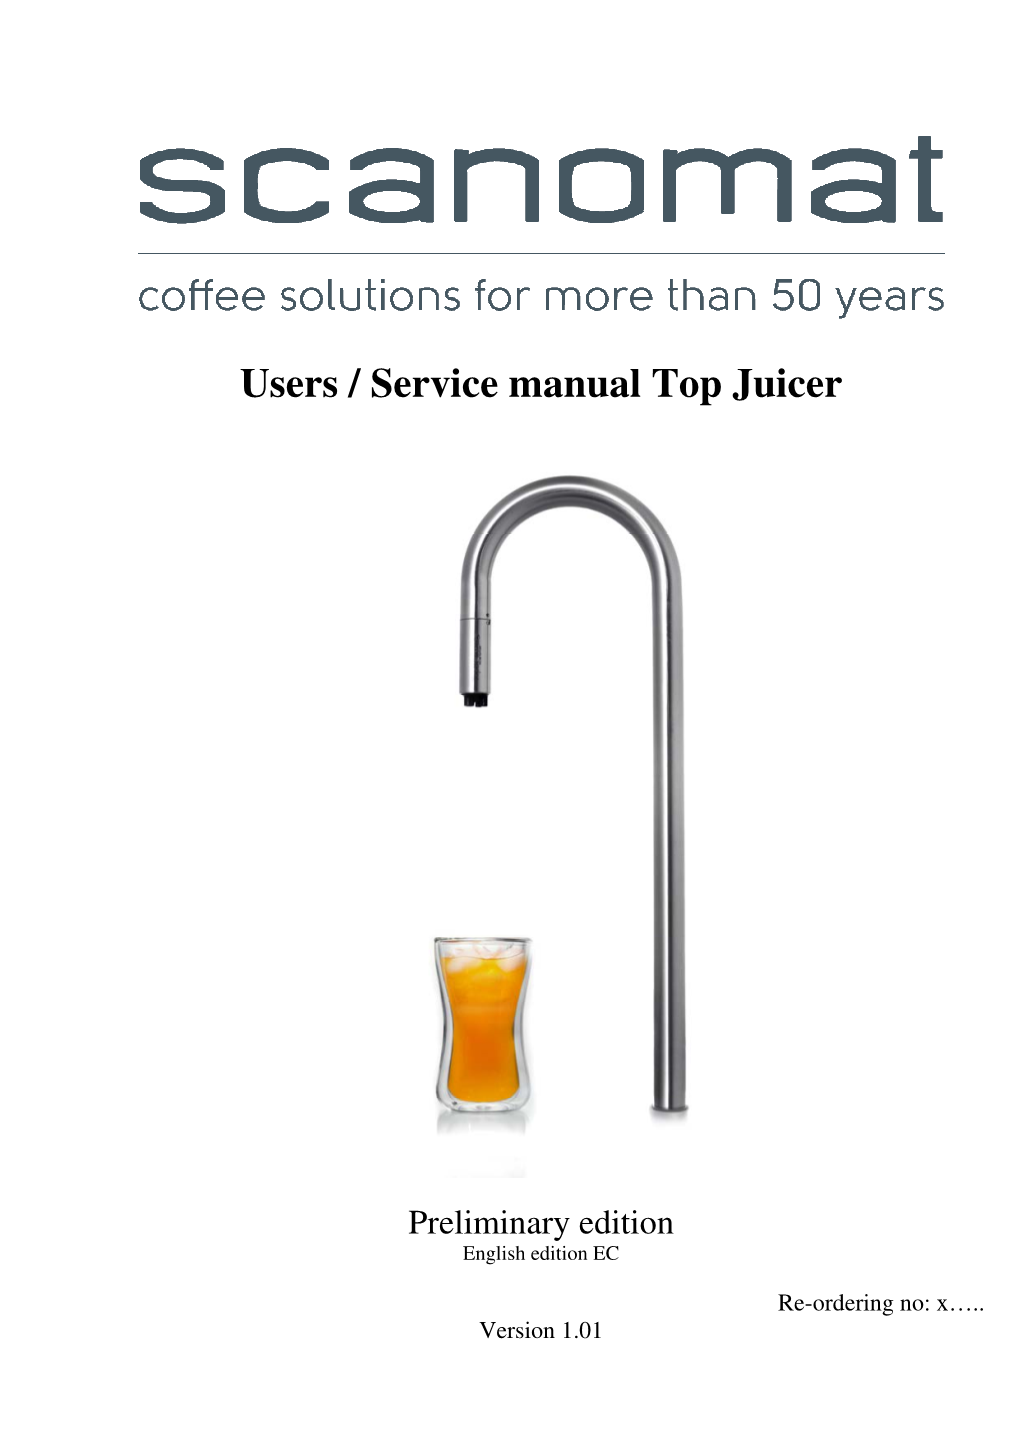 Users / Service Manual Top Juicer